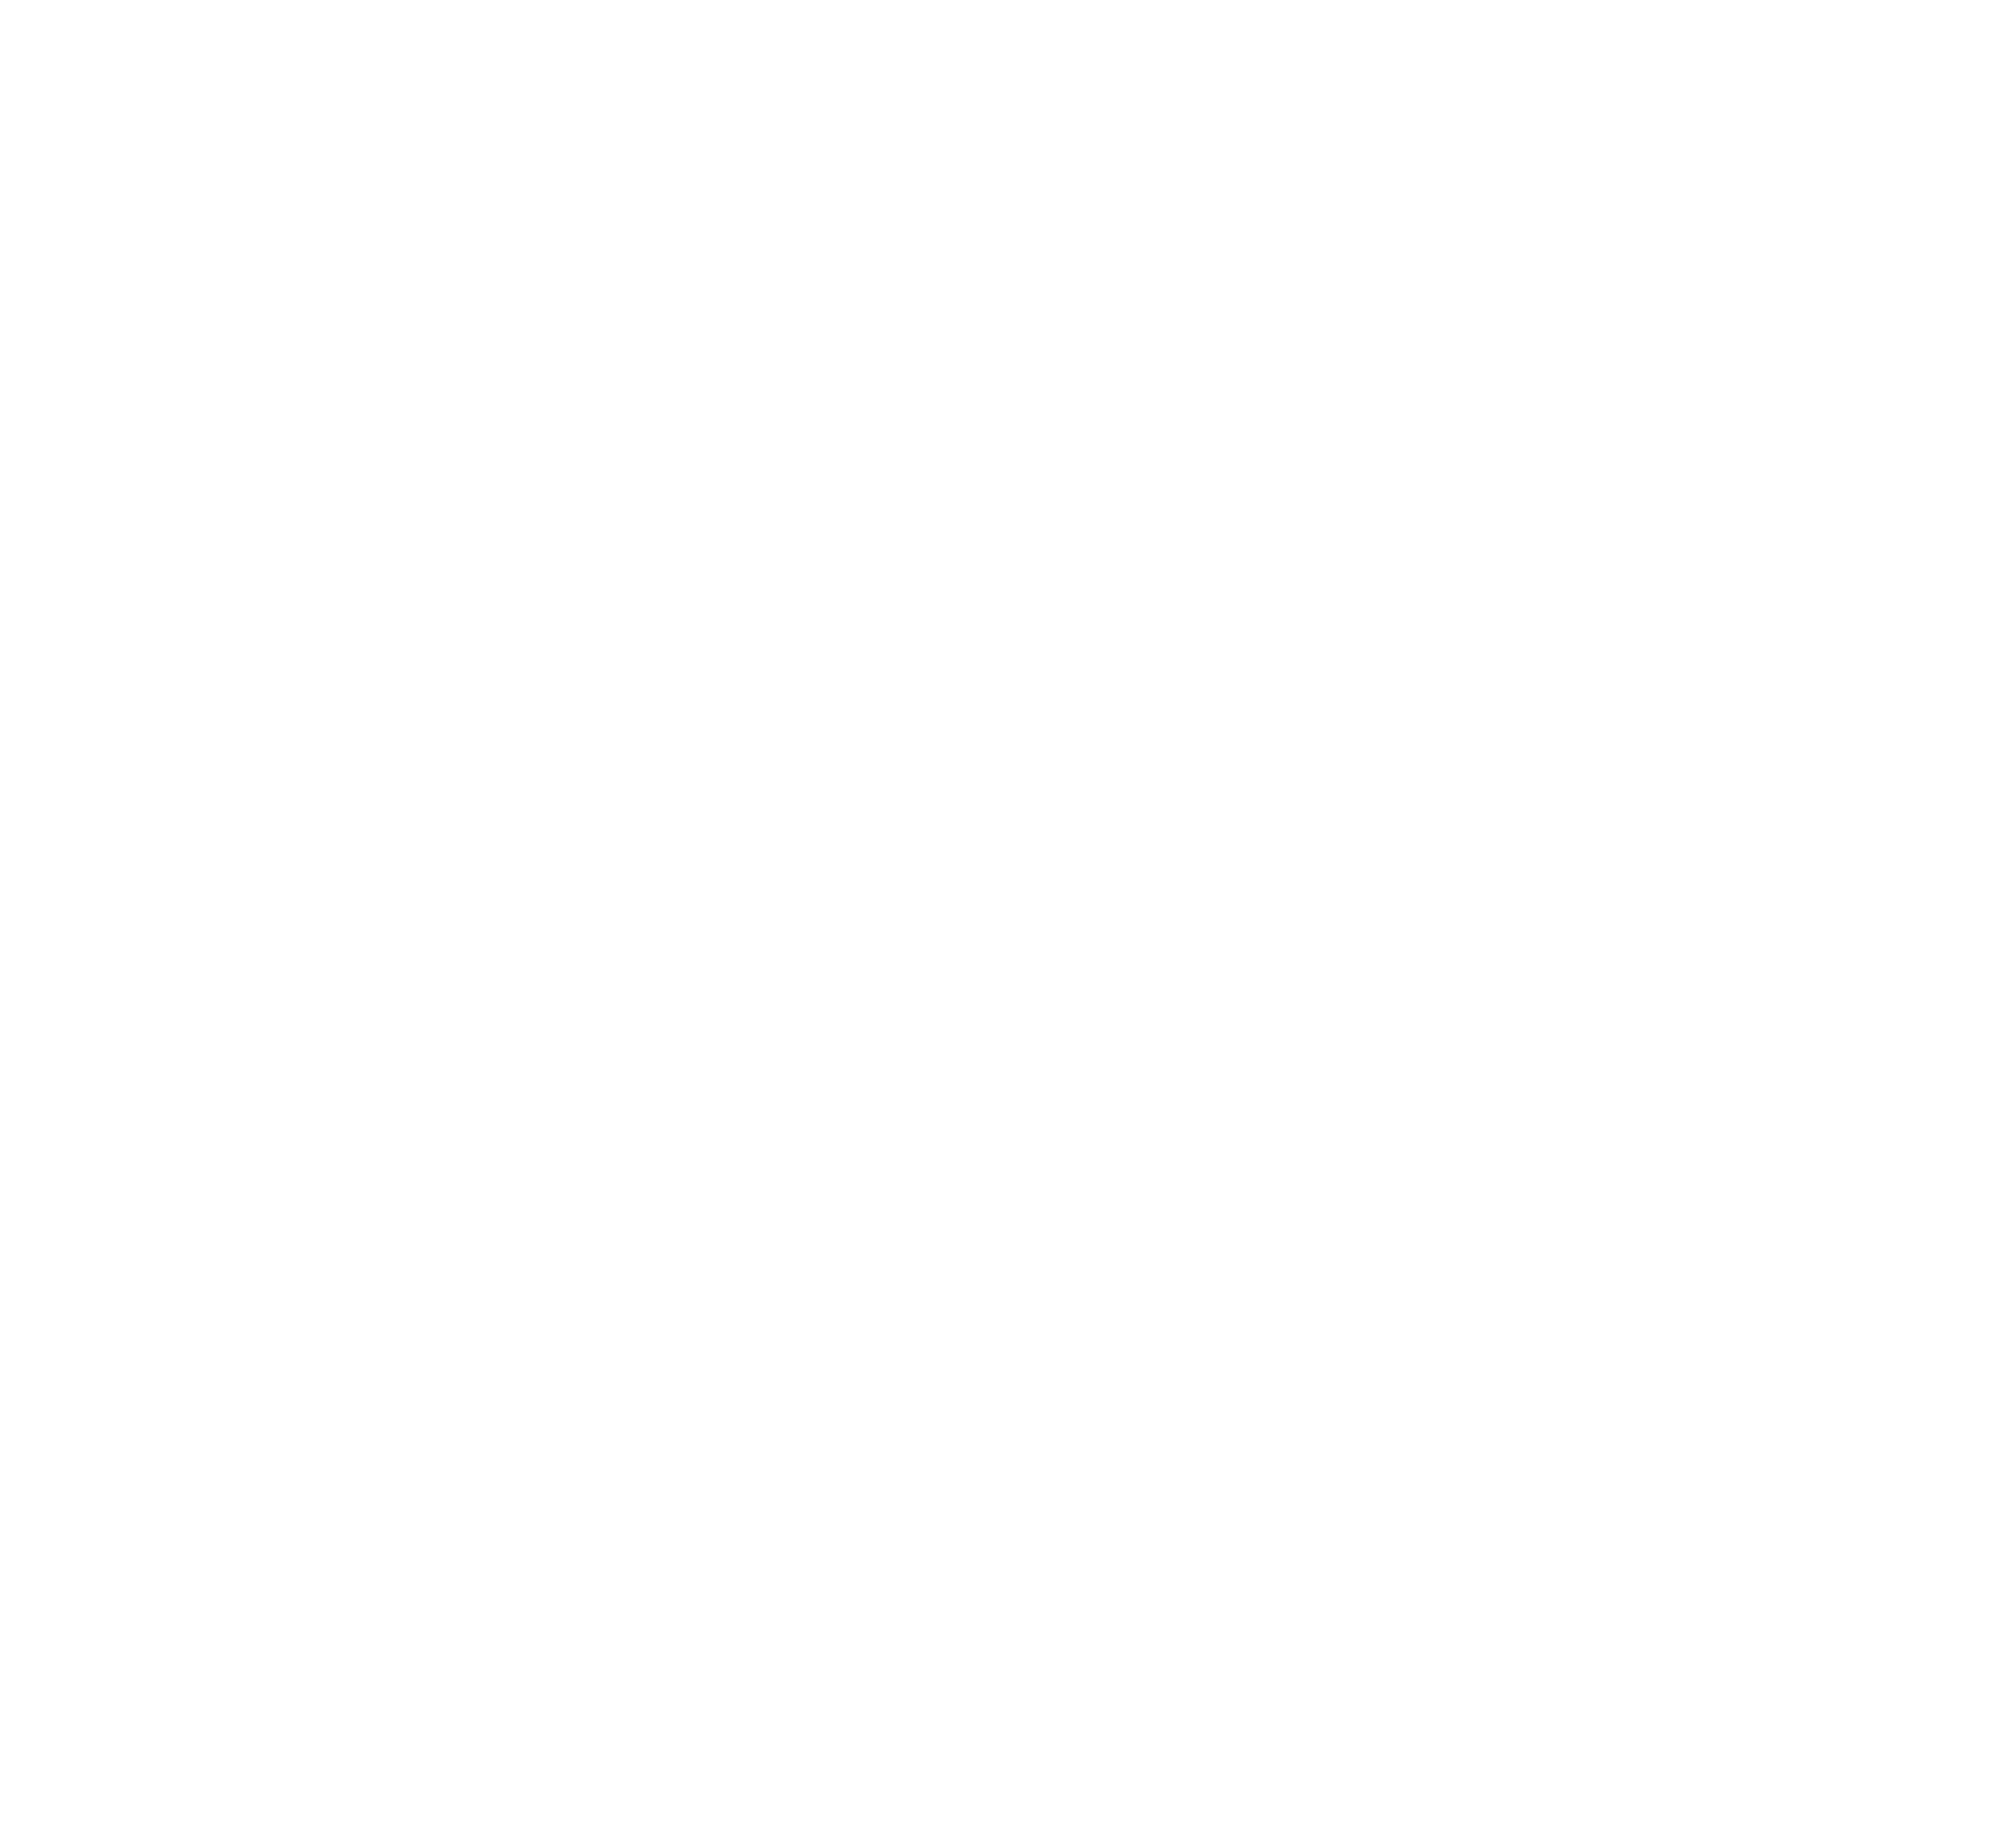 JAZ THE ARTIST